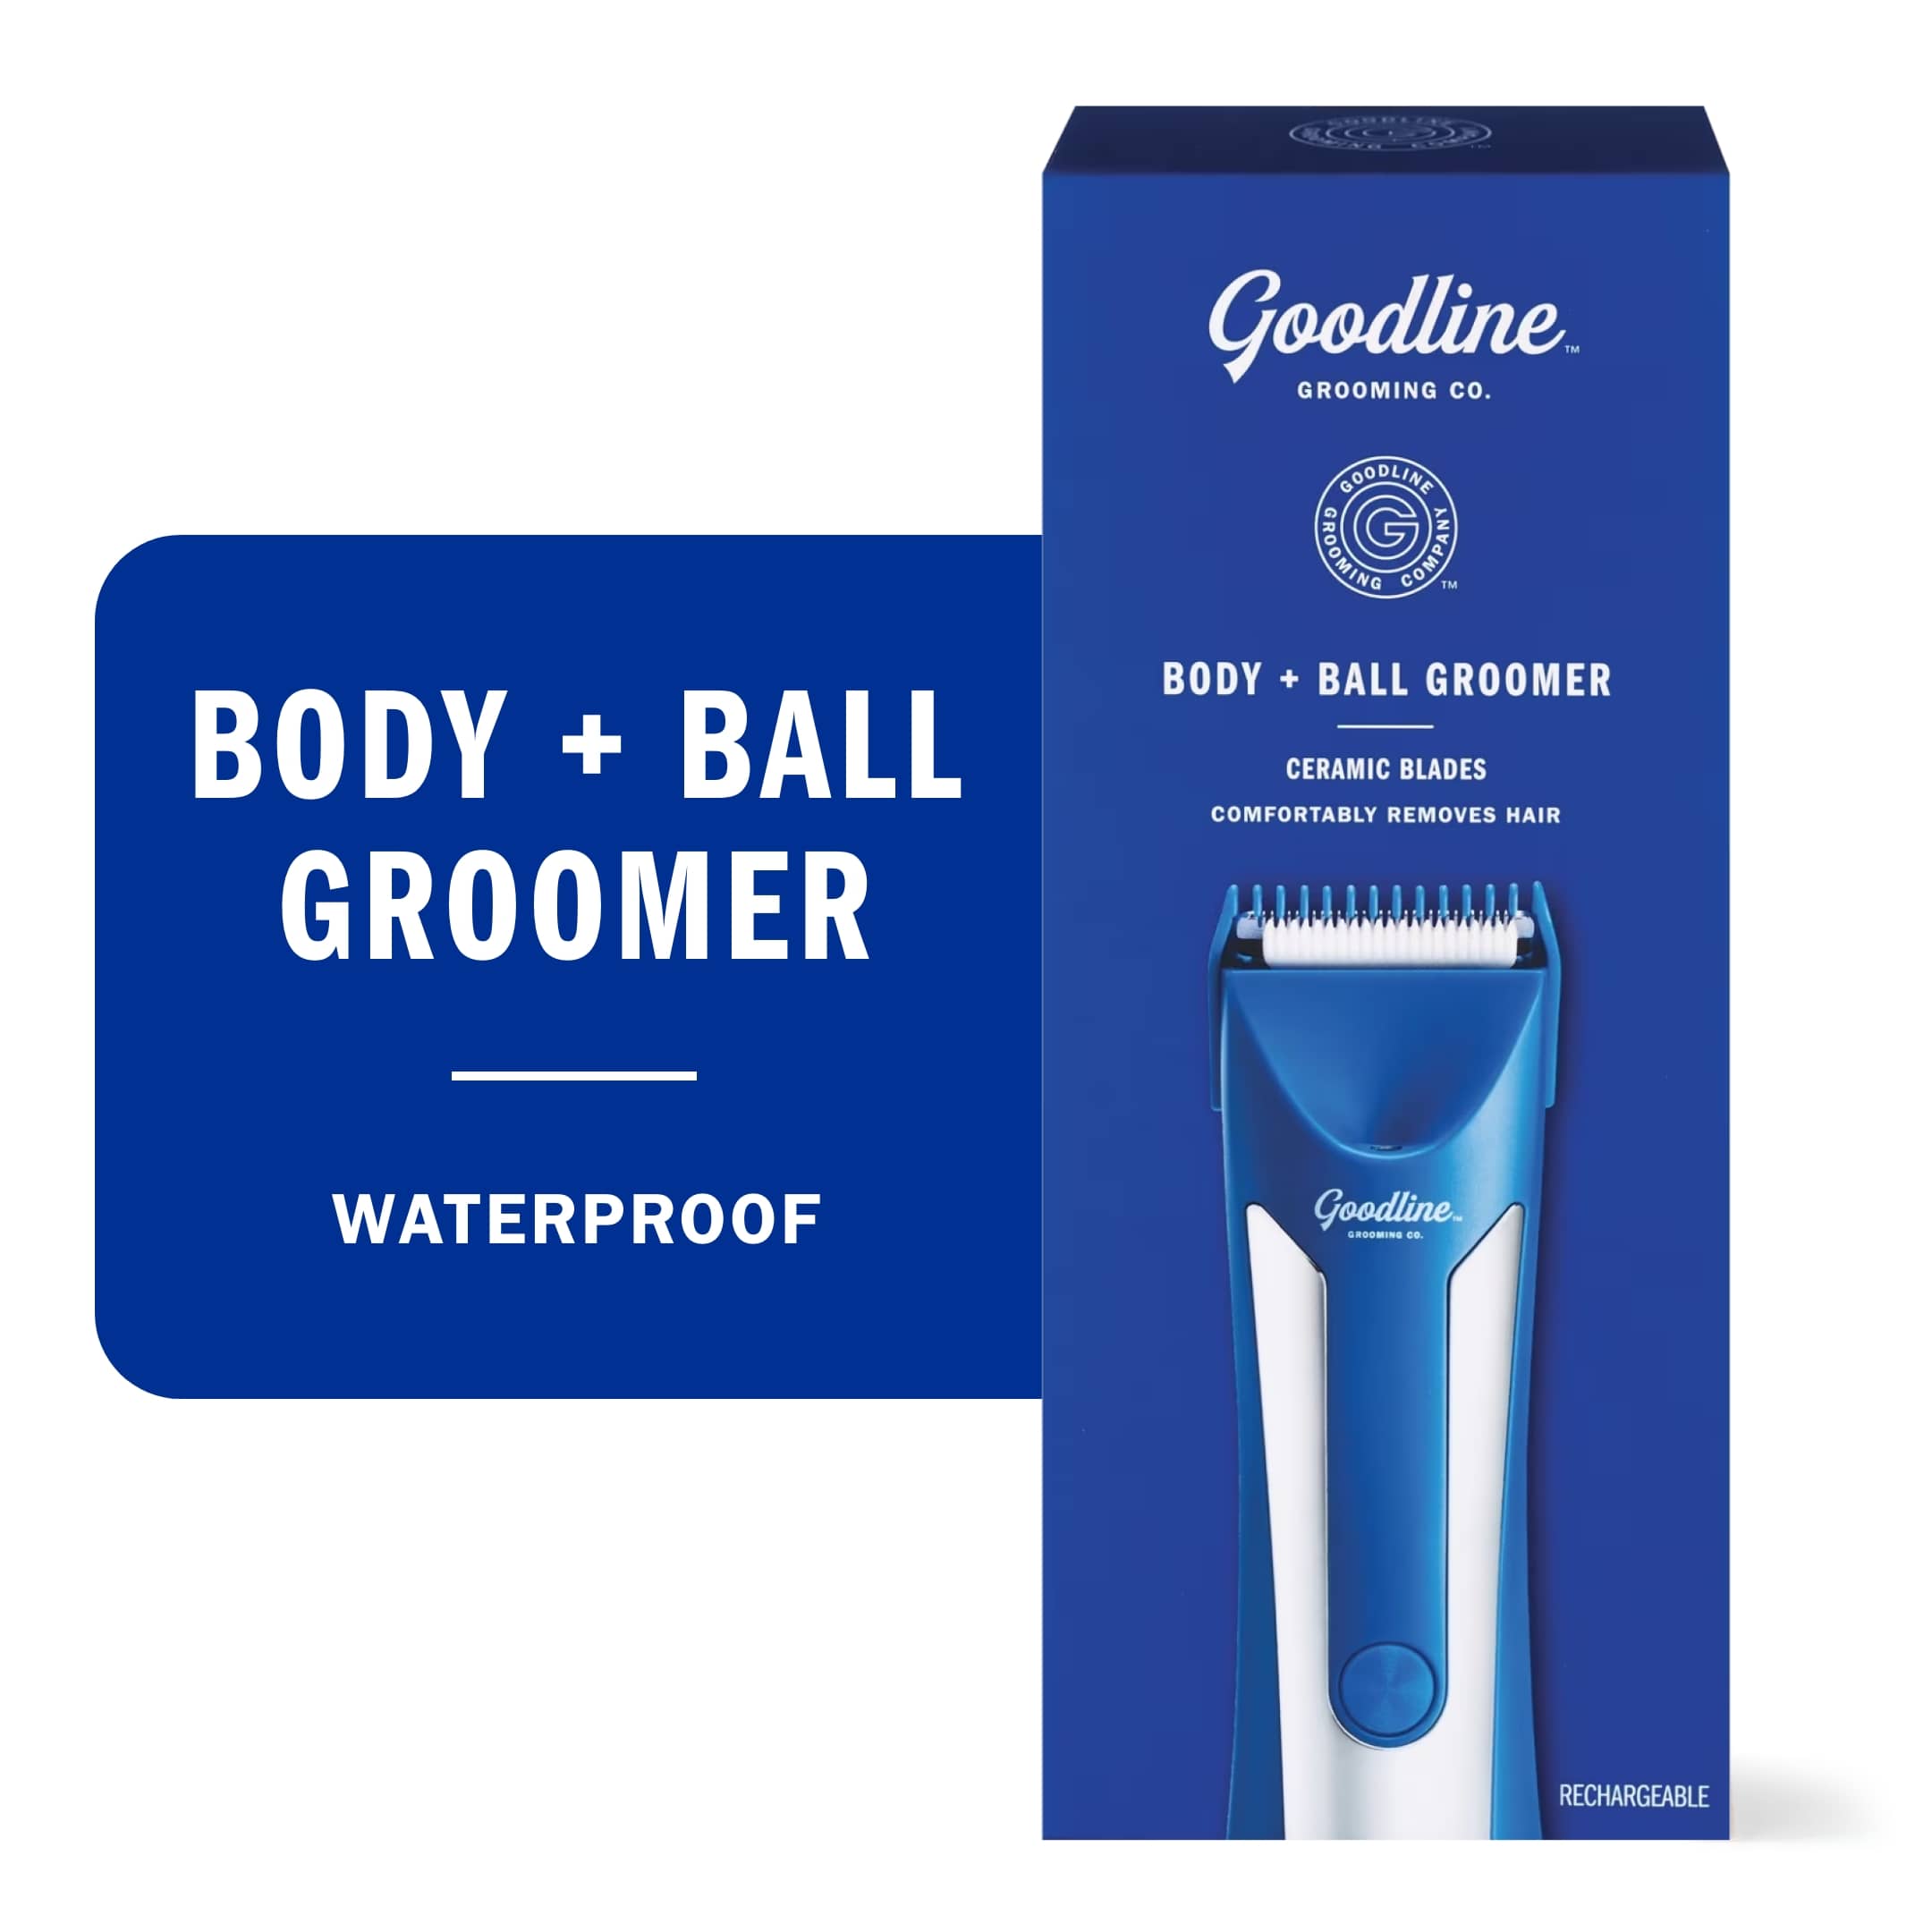 Goodline Grooming Co. Body & Ball Groomer